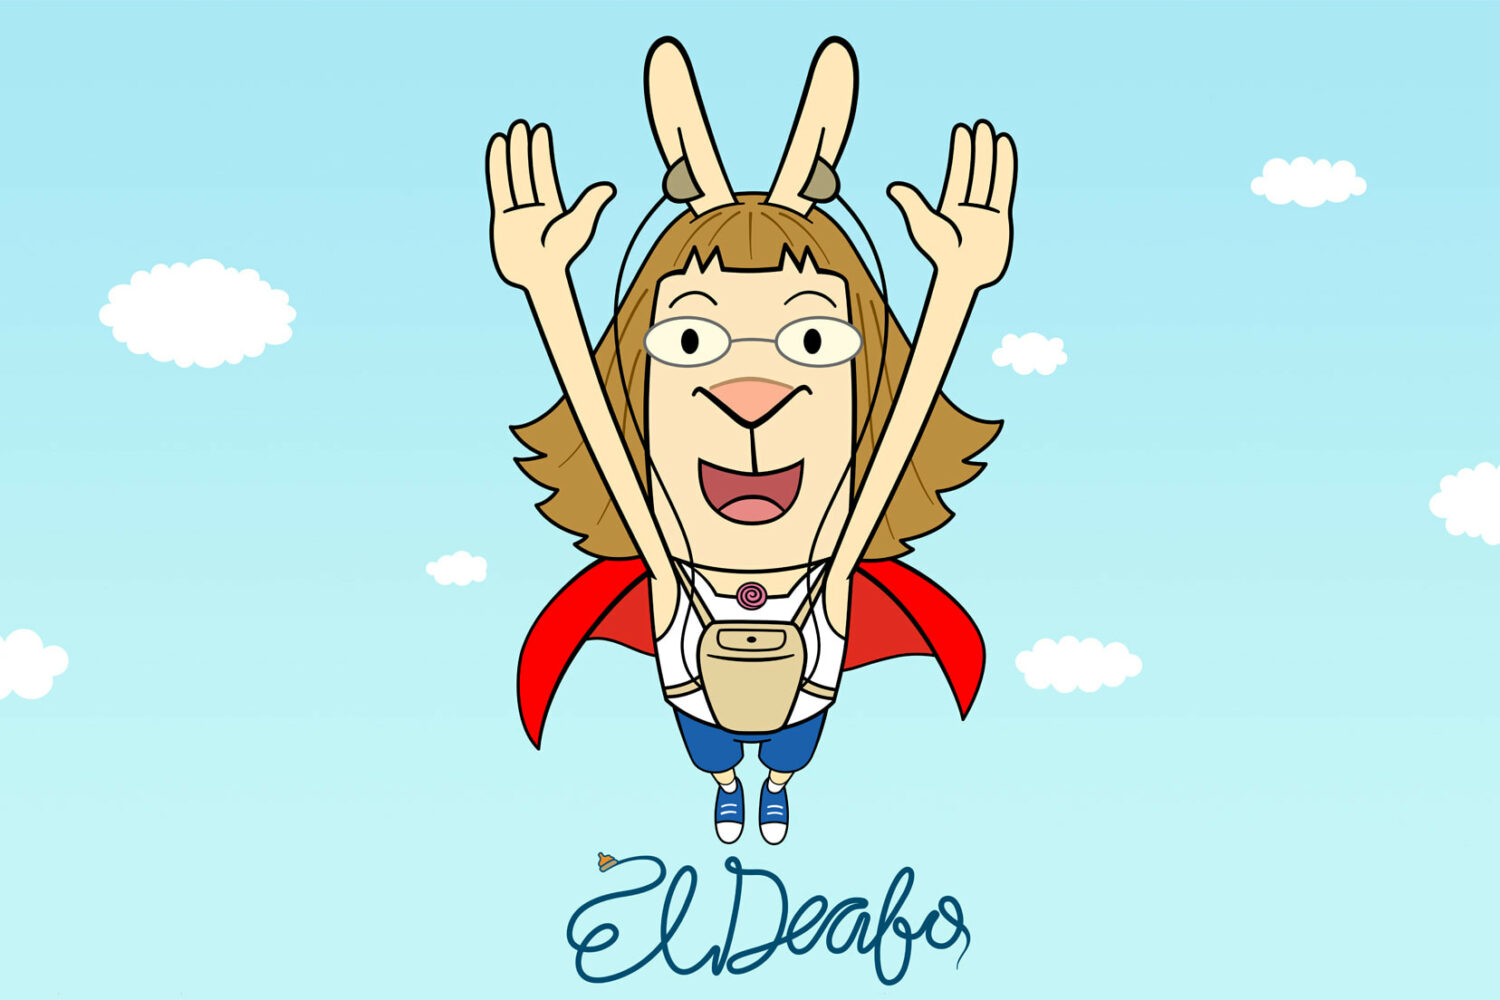 Marketing image showing poster artwork for the Apple TV+ kids show "El Deafo"